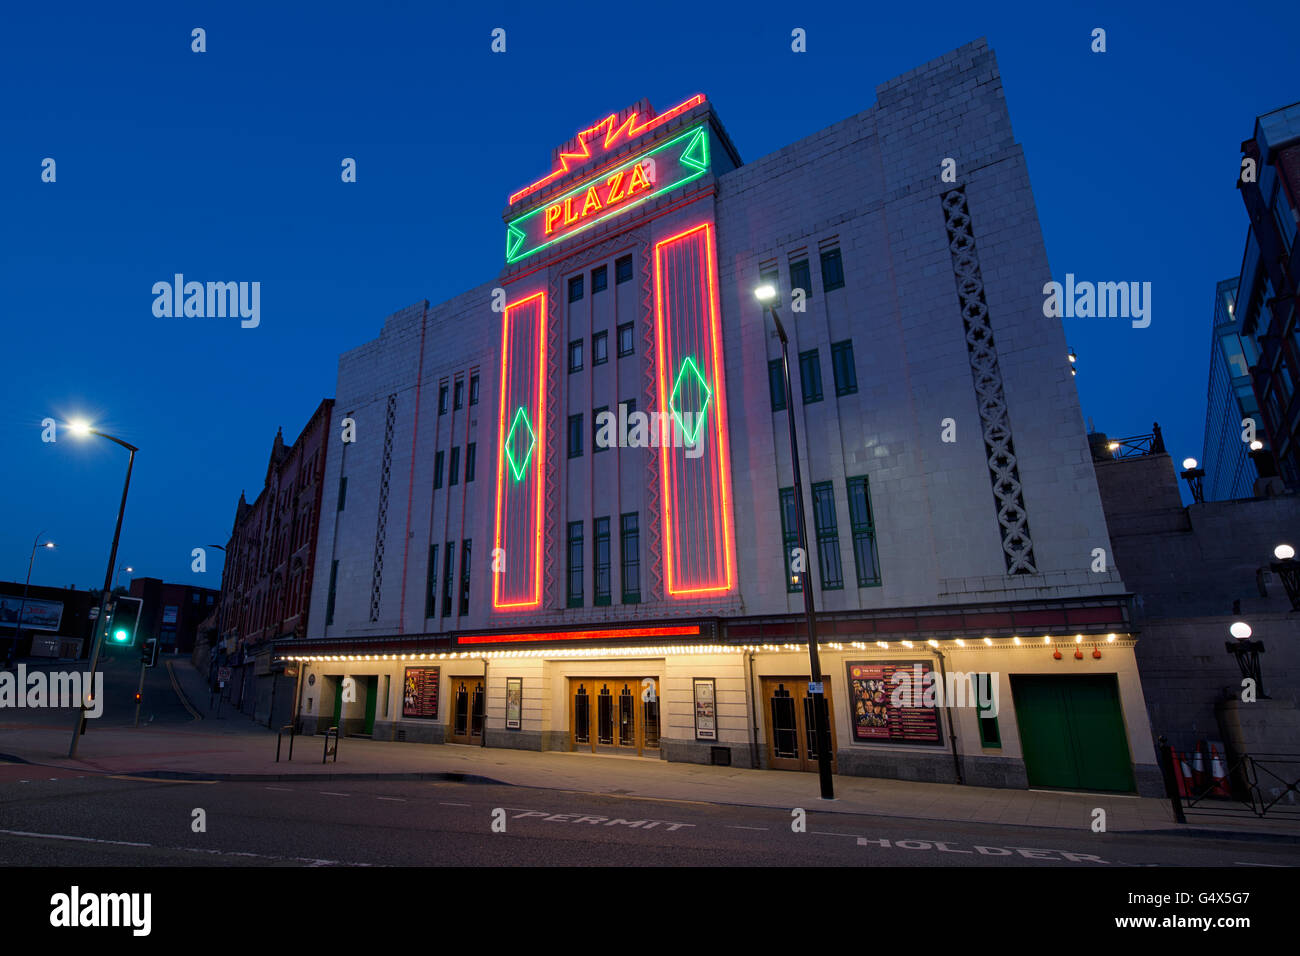 The Art Deco Plaza Cinema theatre located in Stockport in Cheshire, taken on a dark night. Stock Photo